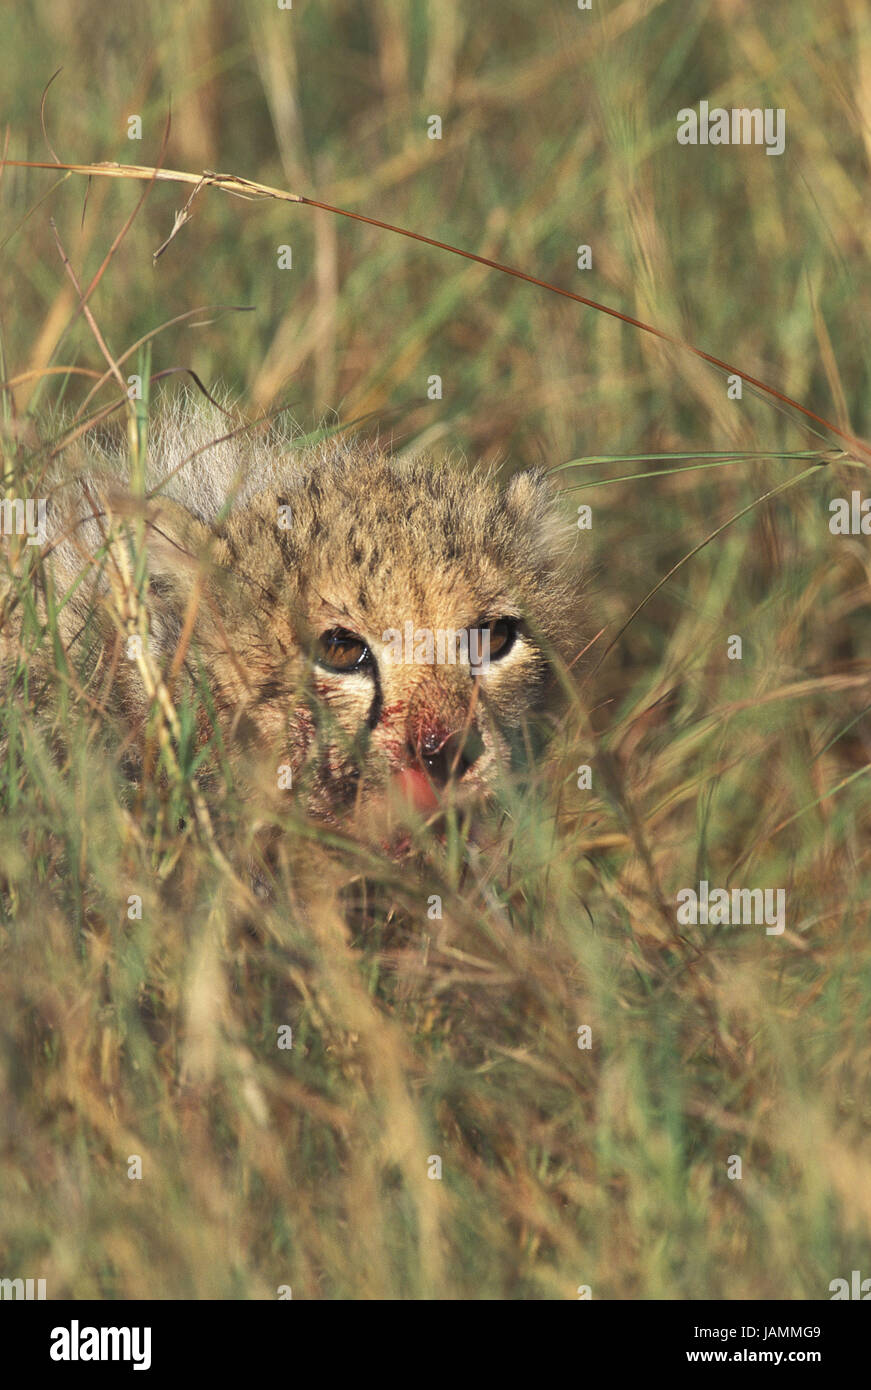 Cheetah,Acinonyx jubatus,young animal,look,bloody,in disguise,grass,Kenya, Stock Photo